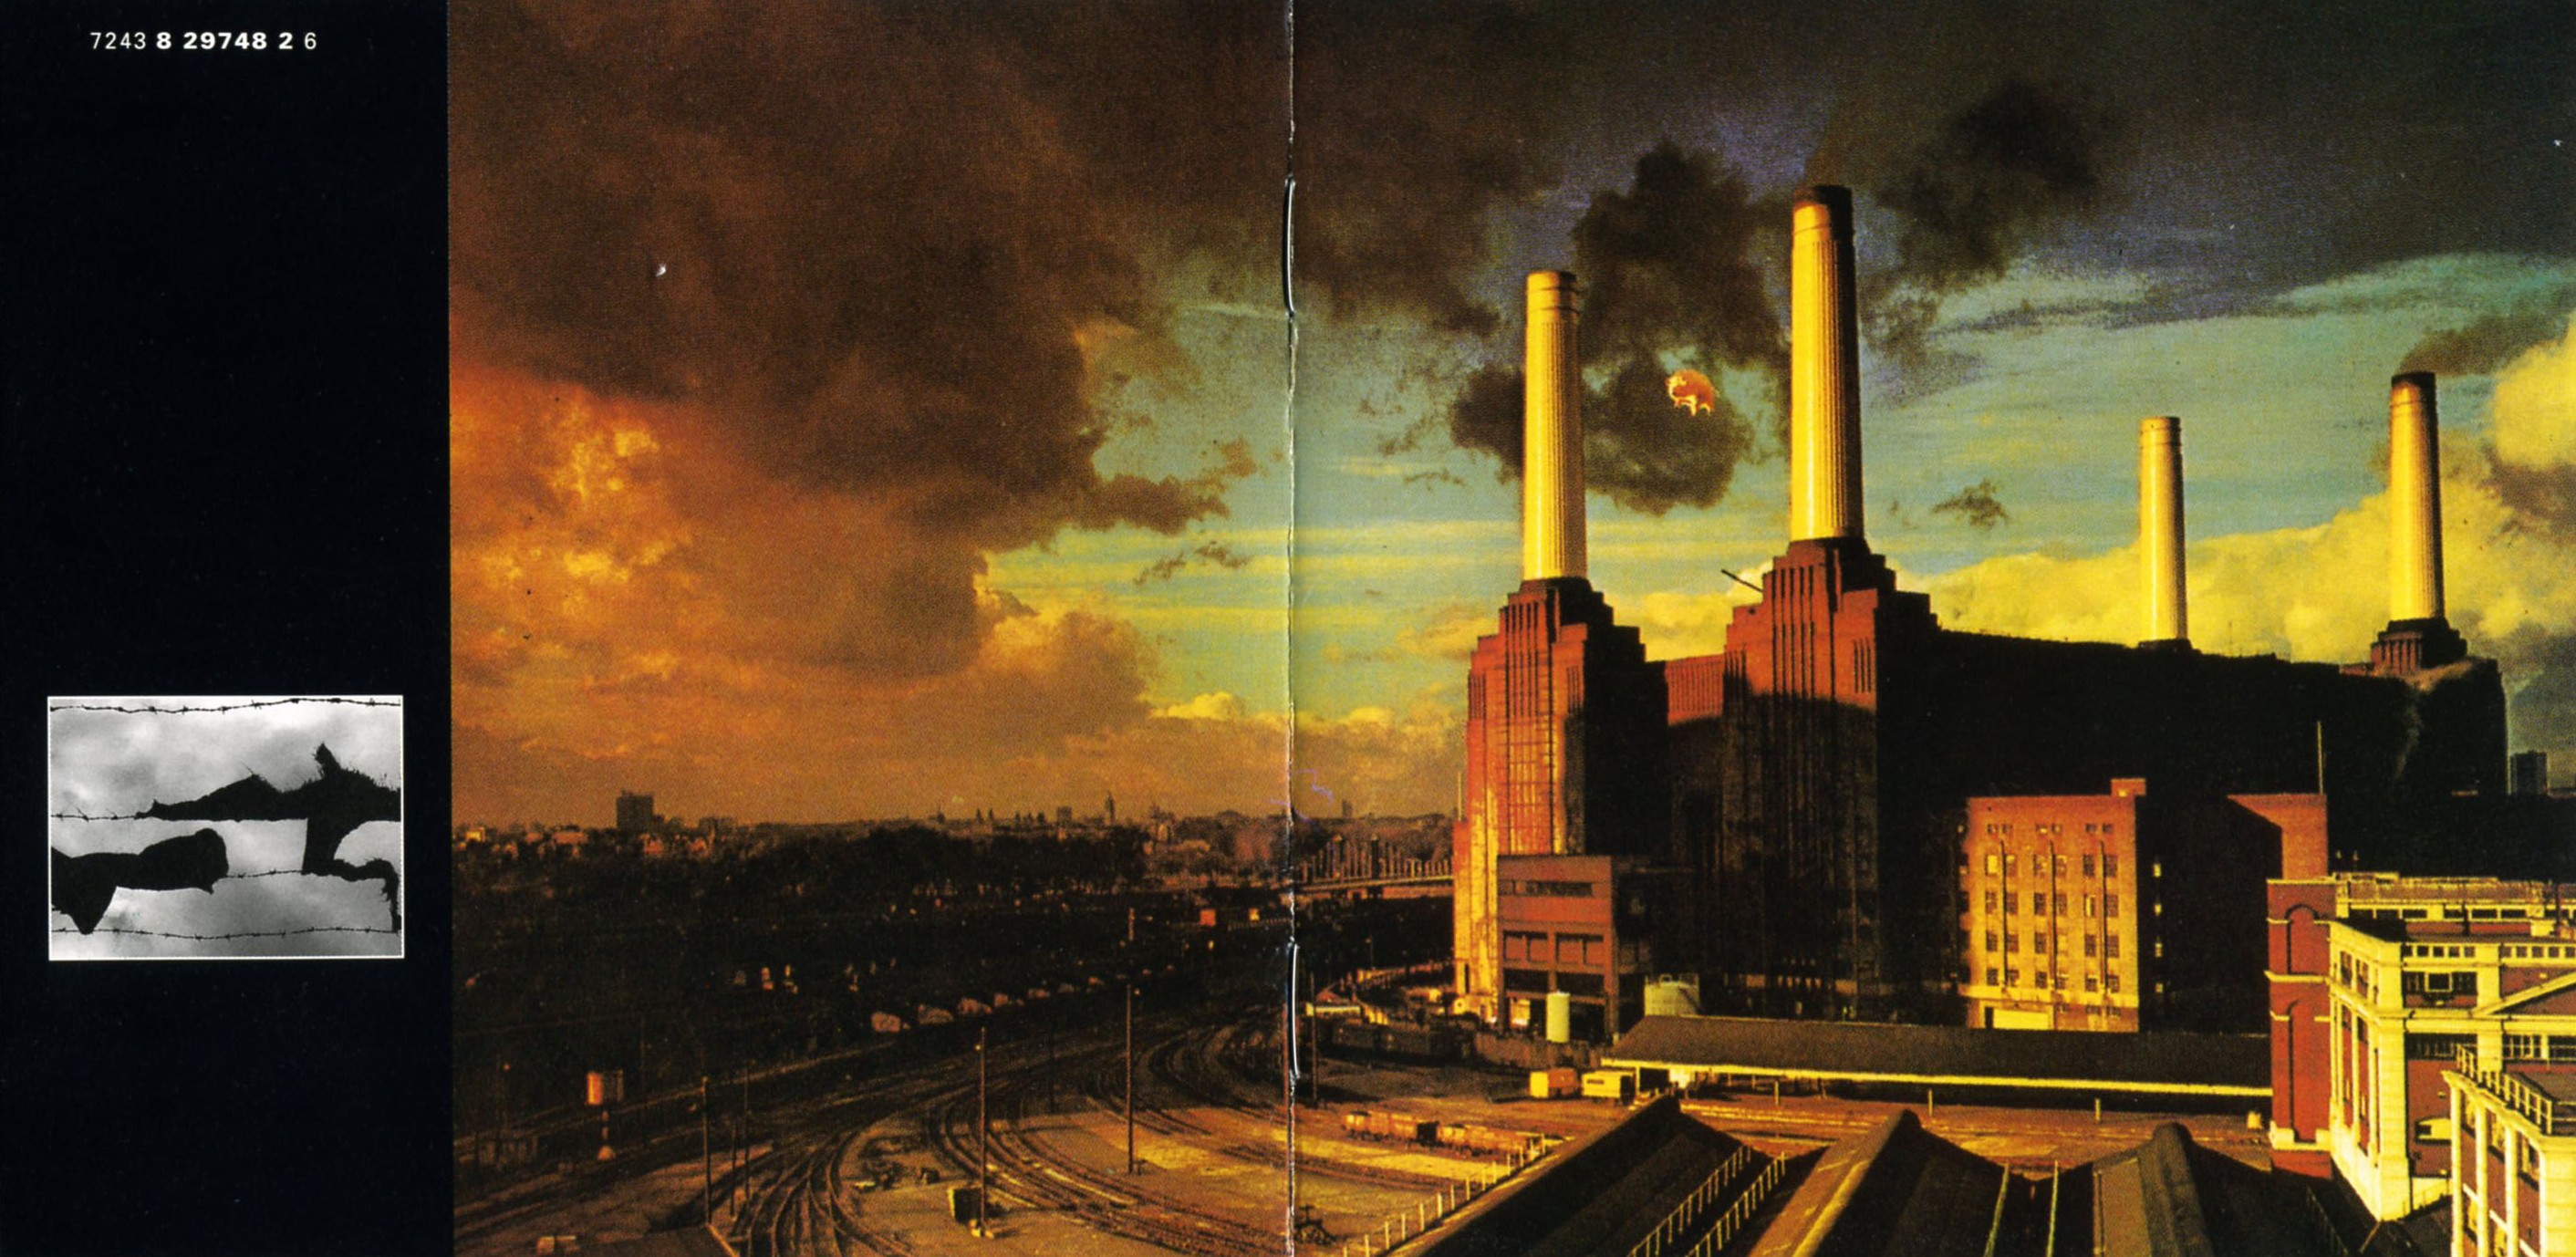 Pink Floyd - обои на рабочий стол